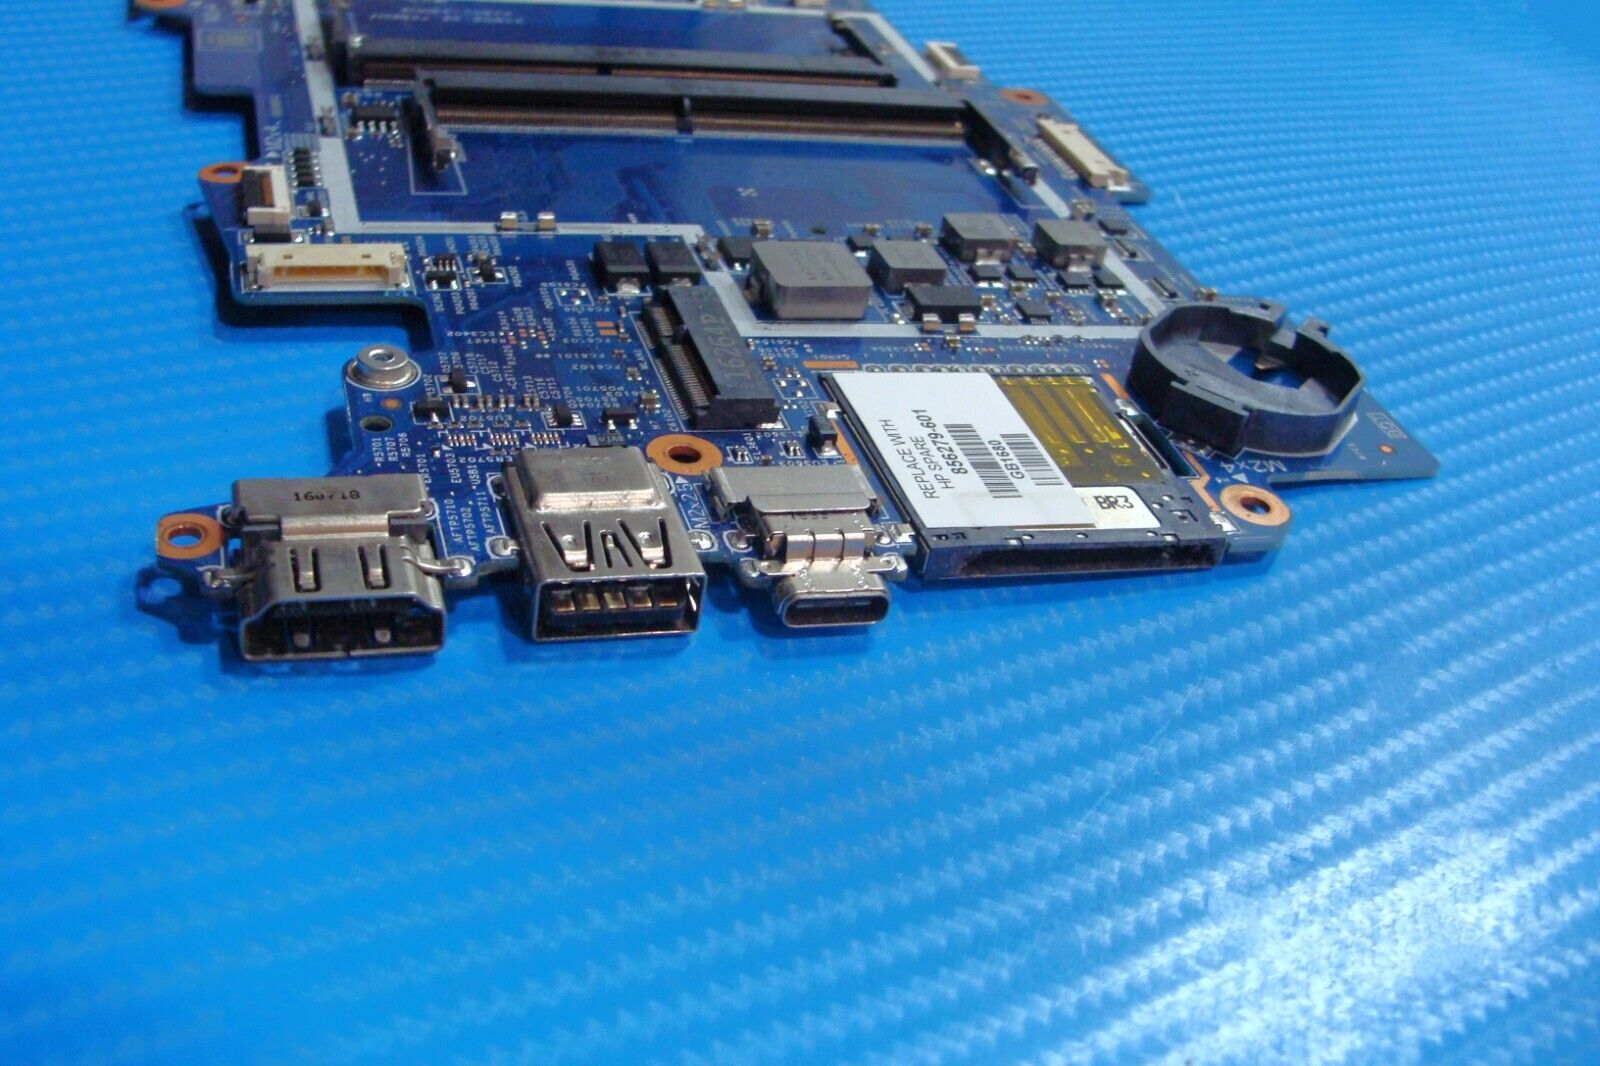 HP Envy x360 15.6” m6-aq003dx Intel i5-6200U 2.3GHz Motherboard 856279-601 AS IS